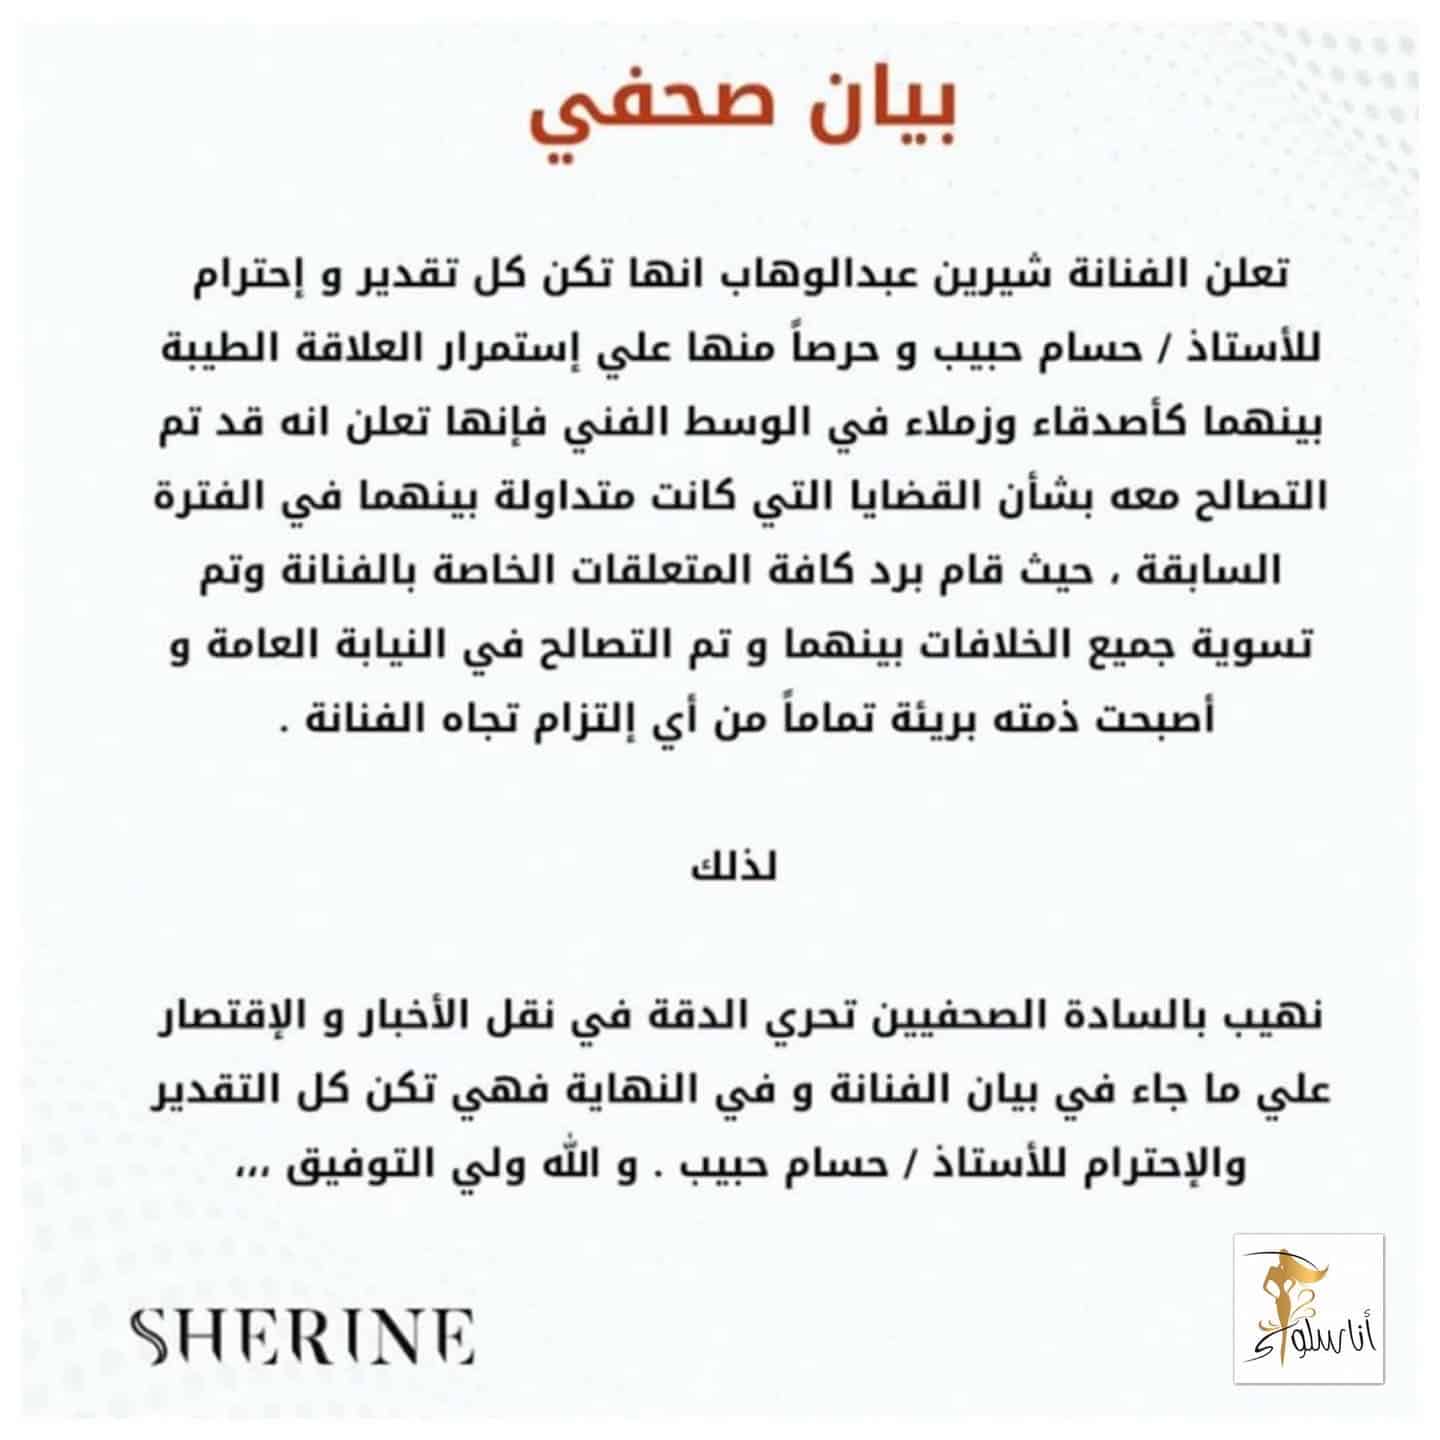 Rekonsiliasi Sherine Abdel Wahab lan Hussam Habib